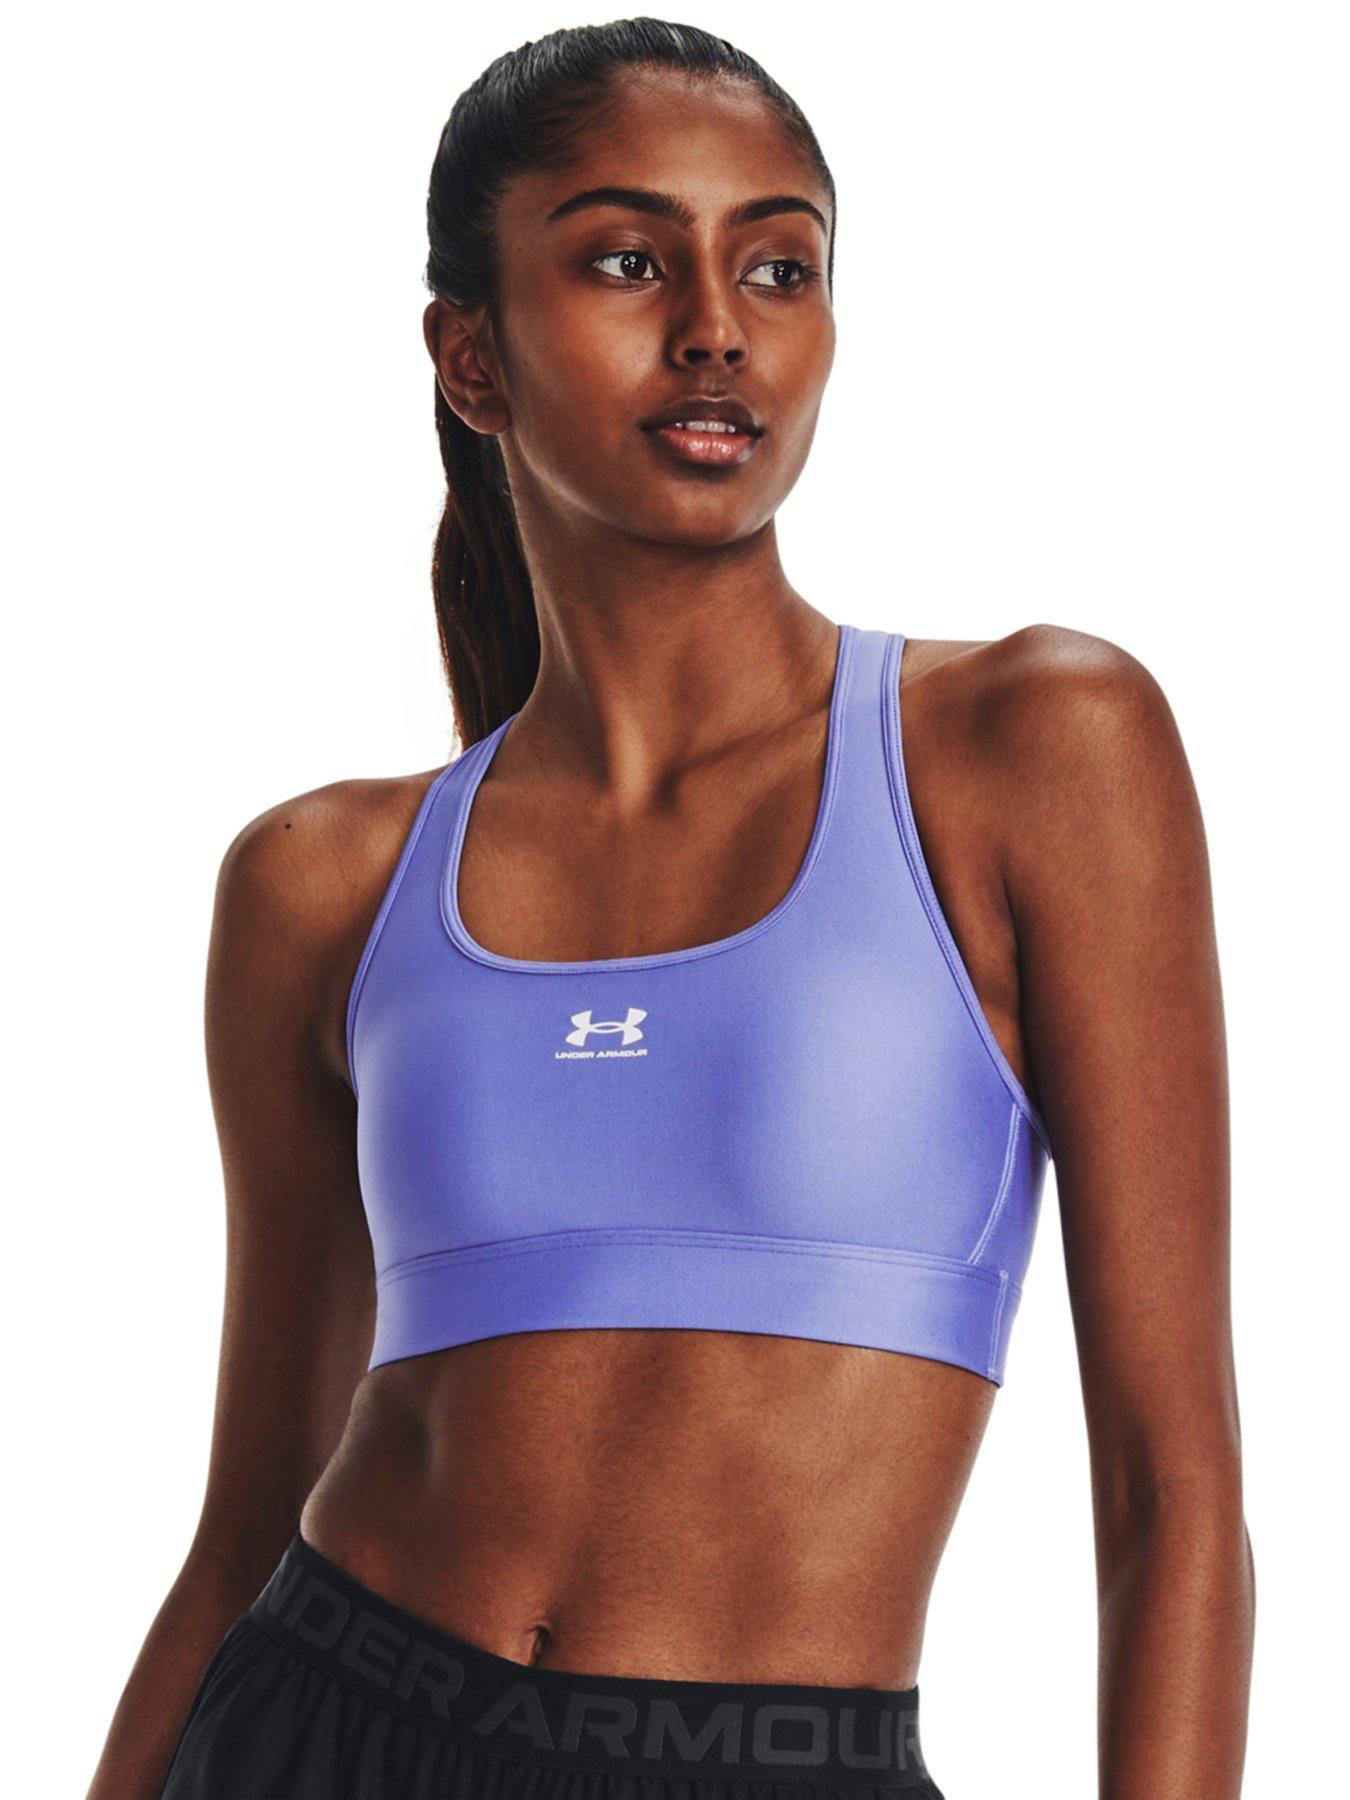 T Shirt Energy Sports Bra Crop Top Yoga Womens Designer T Shirts Gym Vest  Workout Bra Women Cloths Tanks Size SXXL From 30,64 €